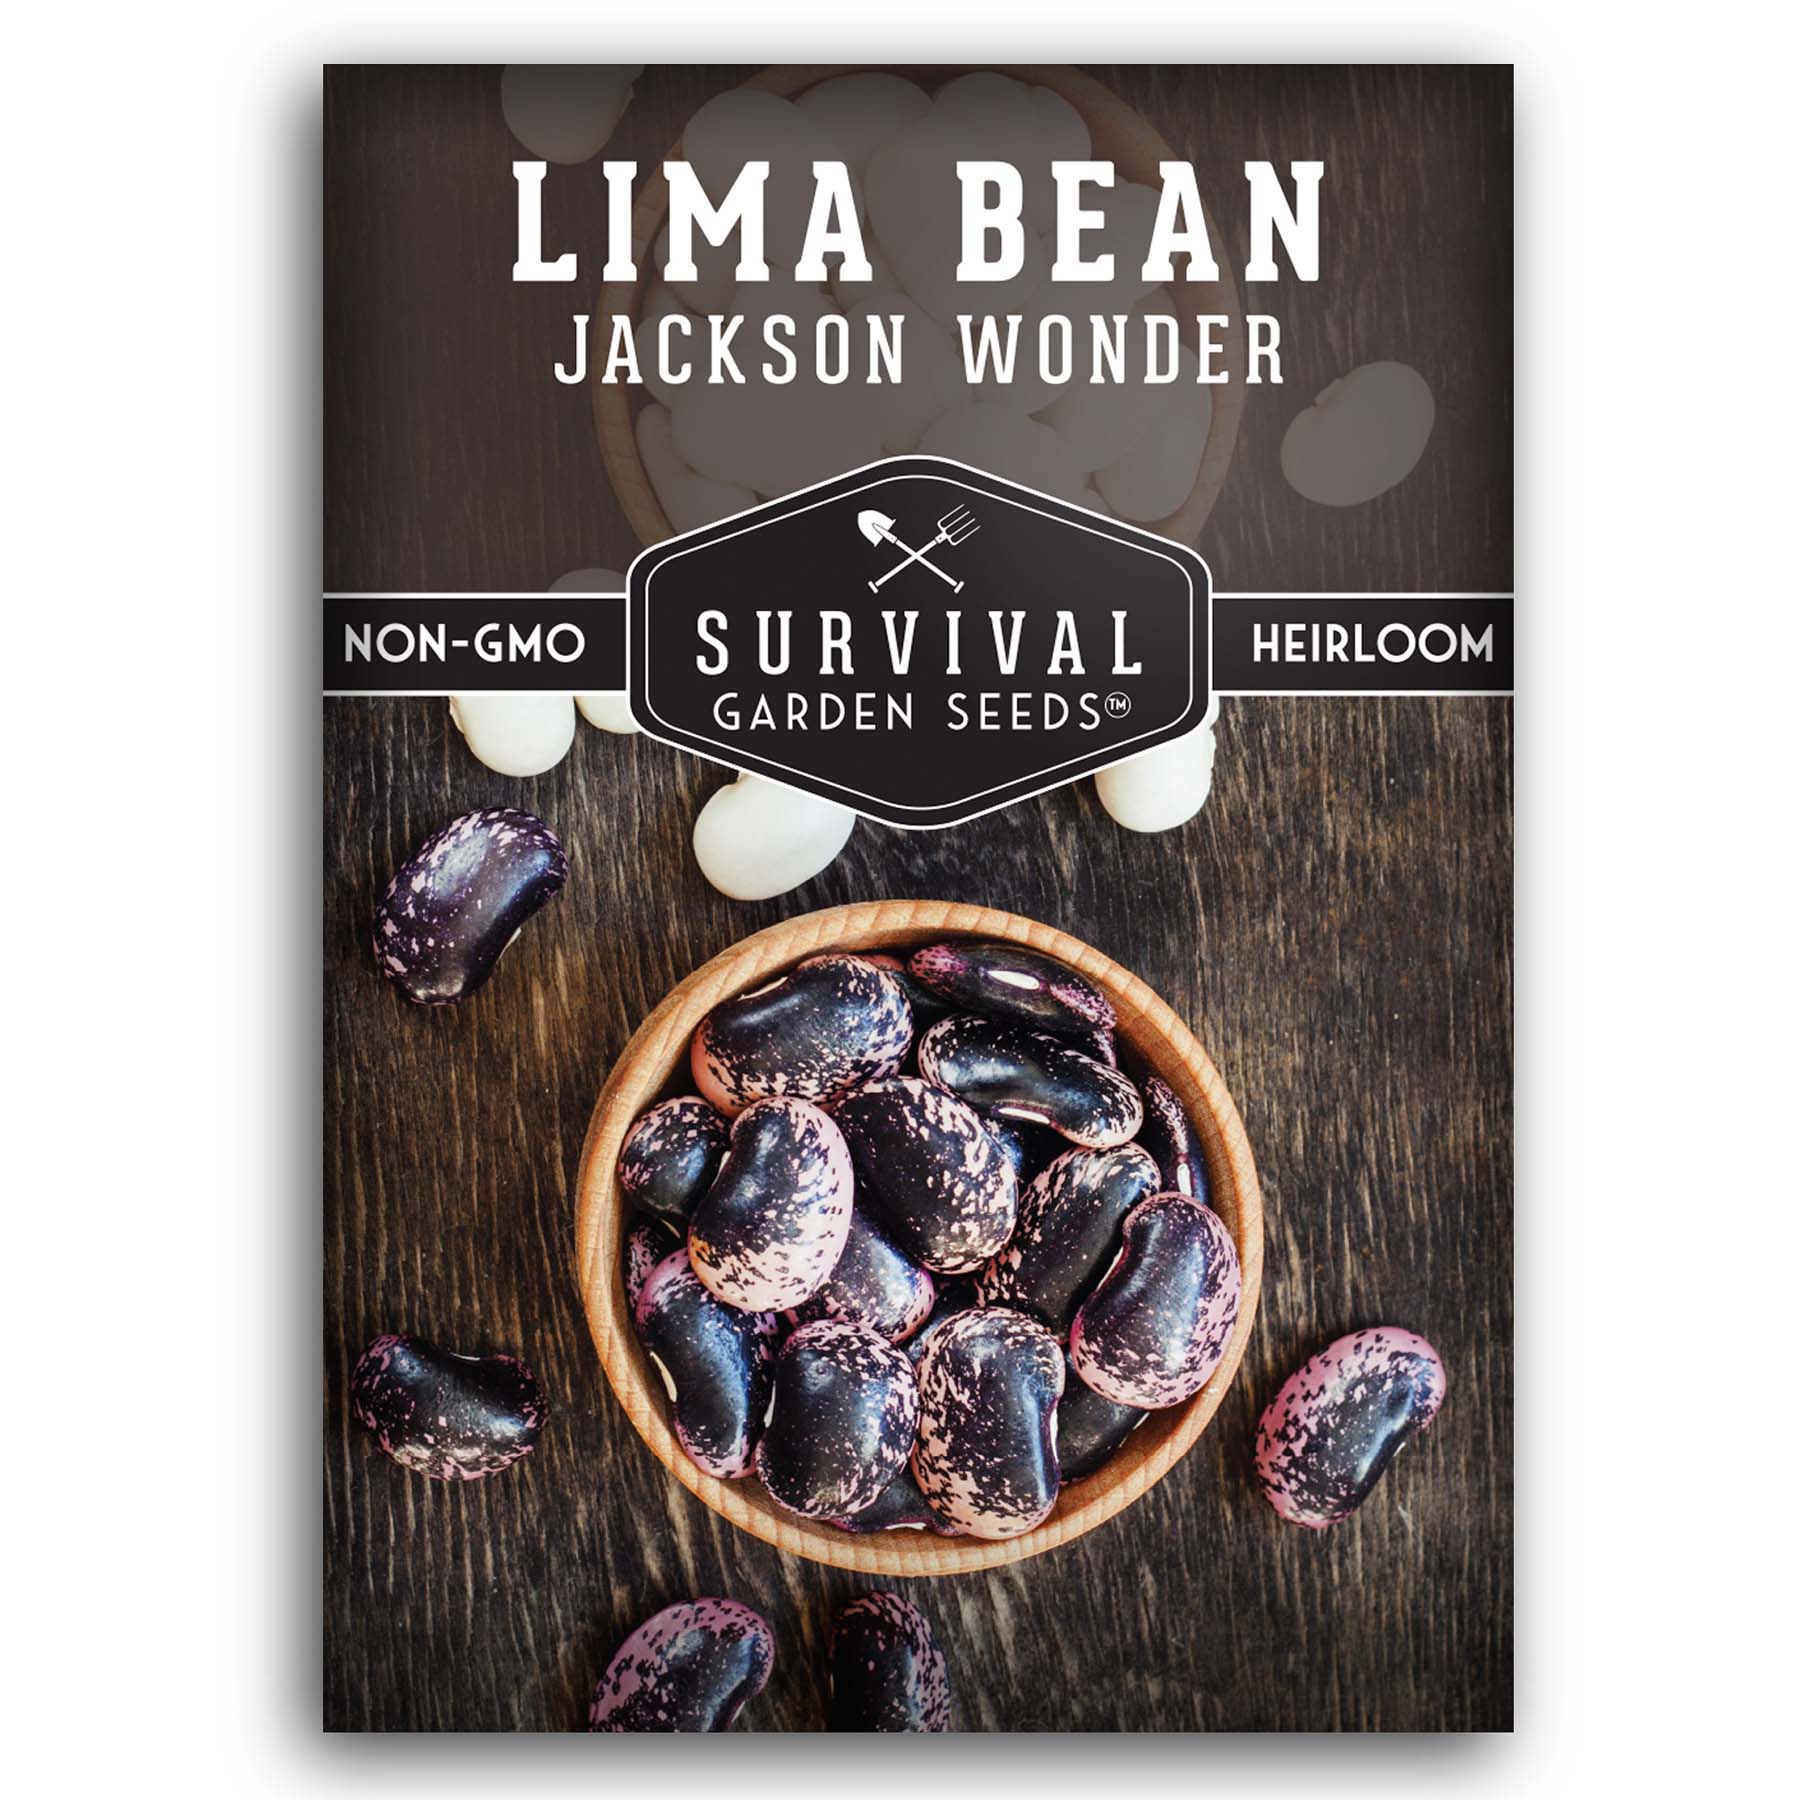 Jackson Wonder Lima Bean seeds for planting